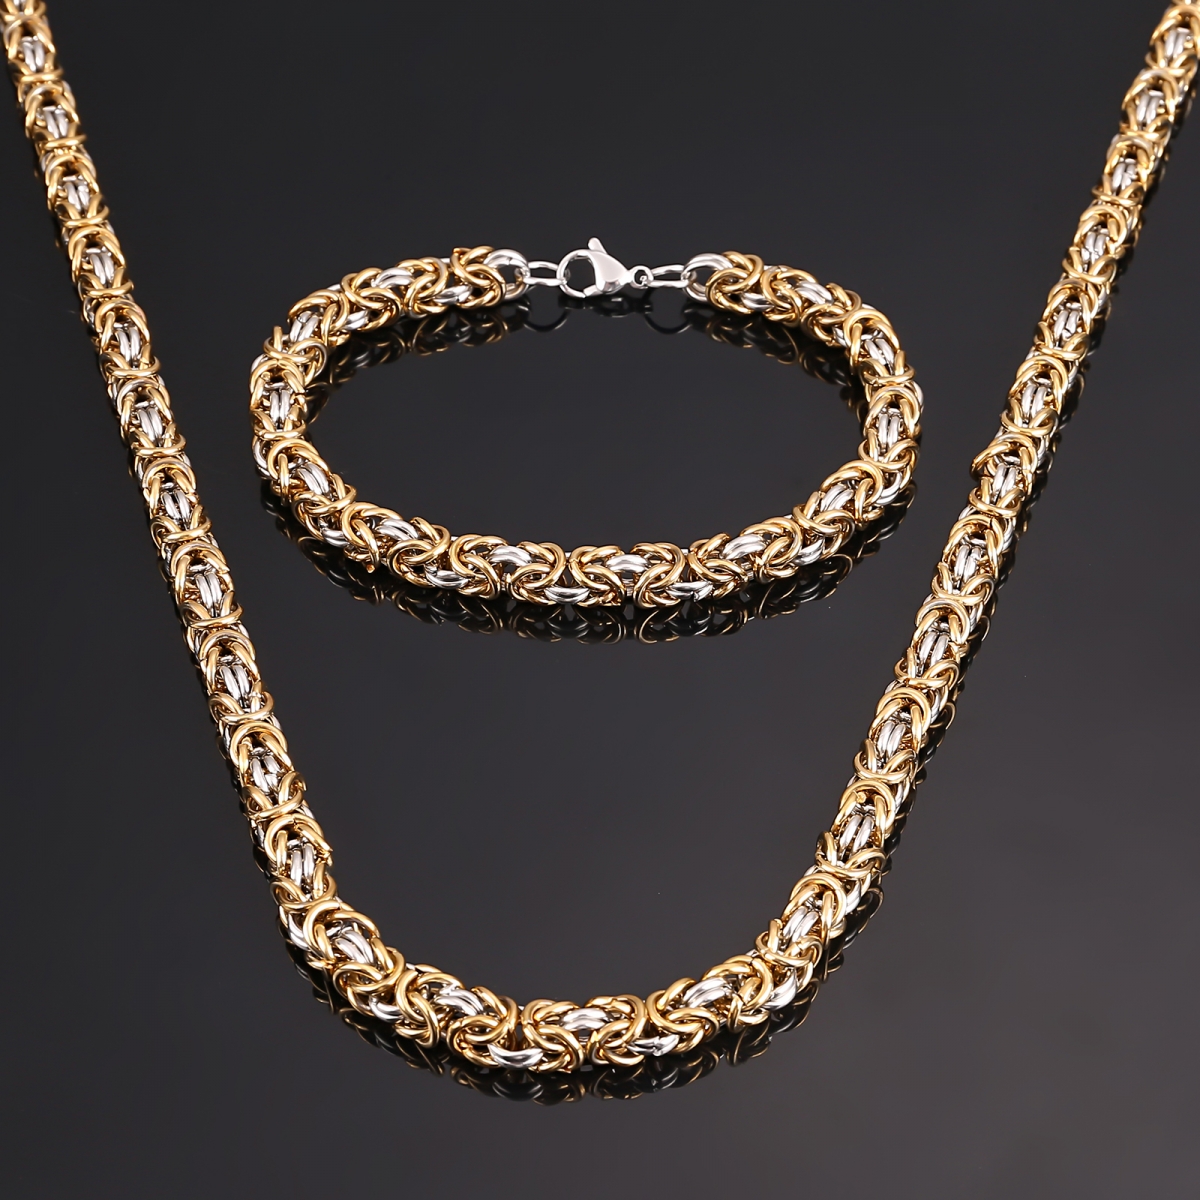 Byzantium King Chain Set US$10/Set-NORSECOLLECTION- Viking Jewelry,Viking Necklace,Viking Bracelet,Viking Rings,Viking Mugs,Viking Accessories,Viking Crafts